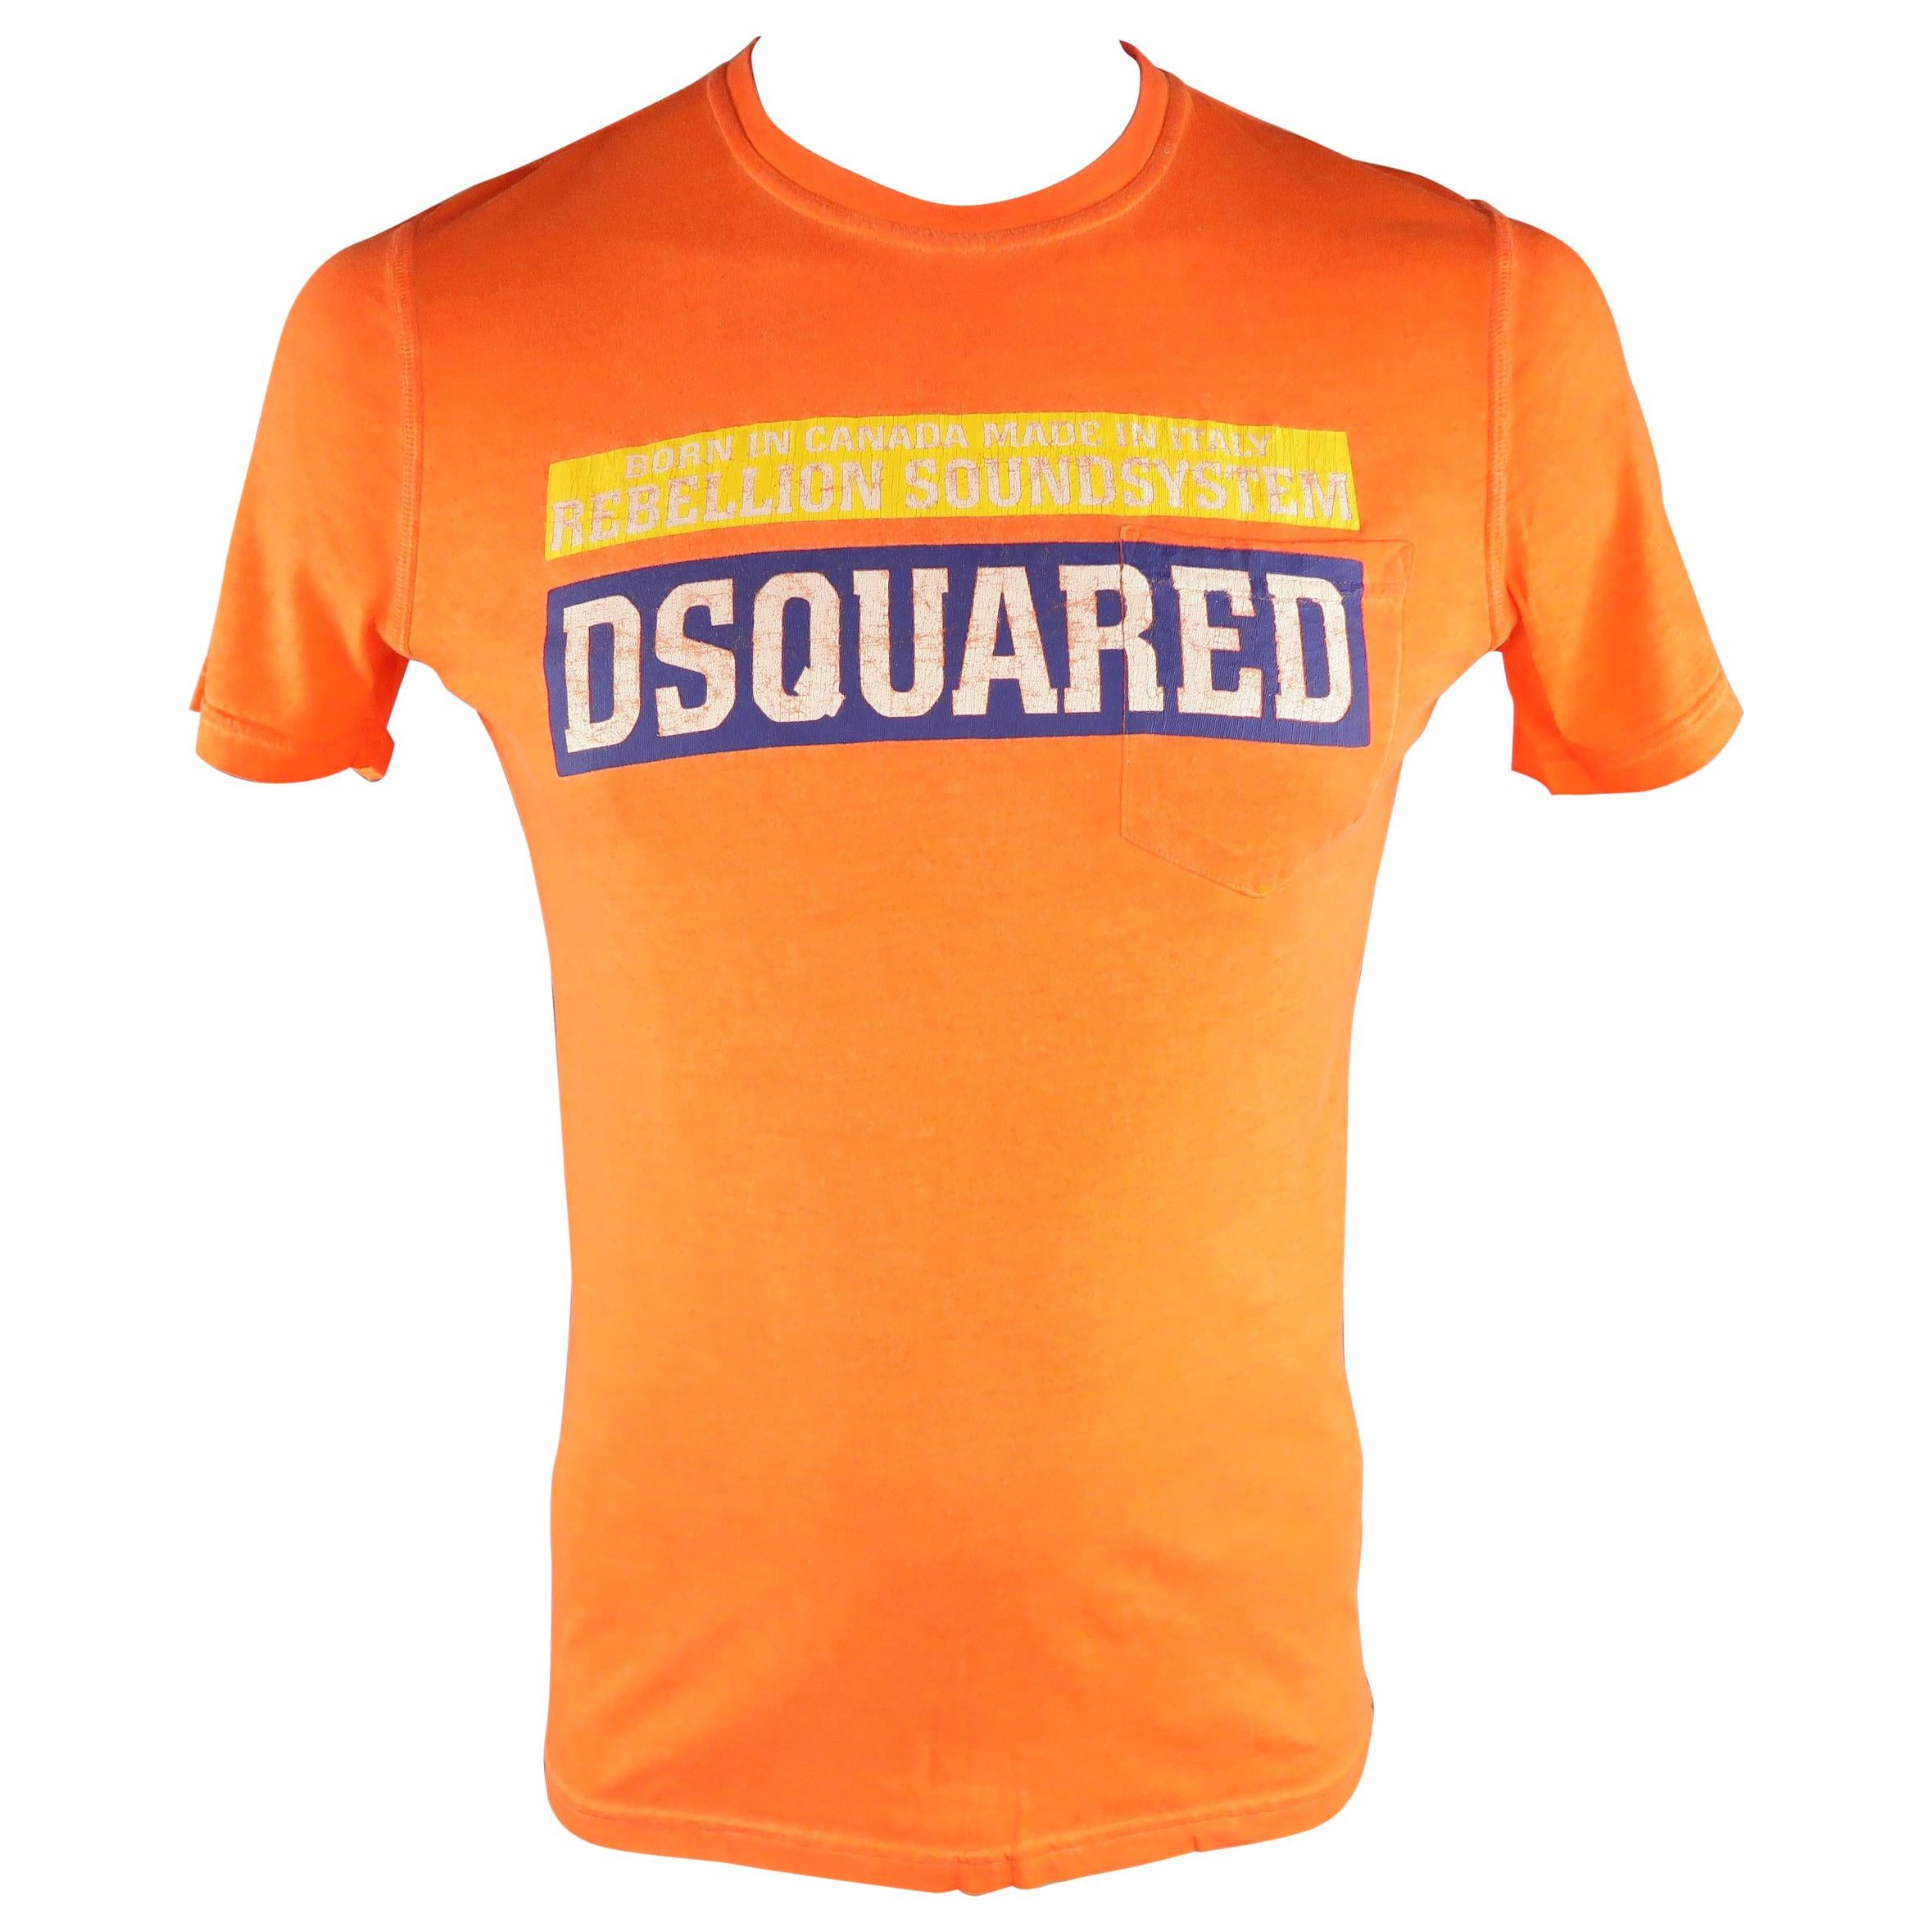 DSQUARED2 Size M Orange Graphic "Rebellion Soundsystem" Cotton T-shirt